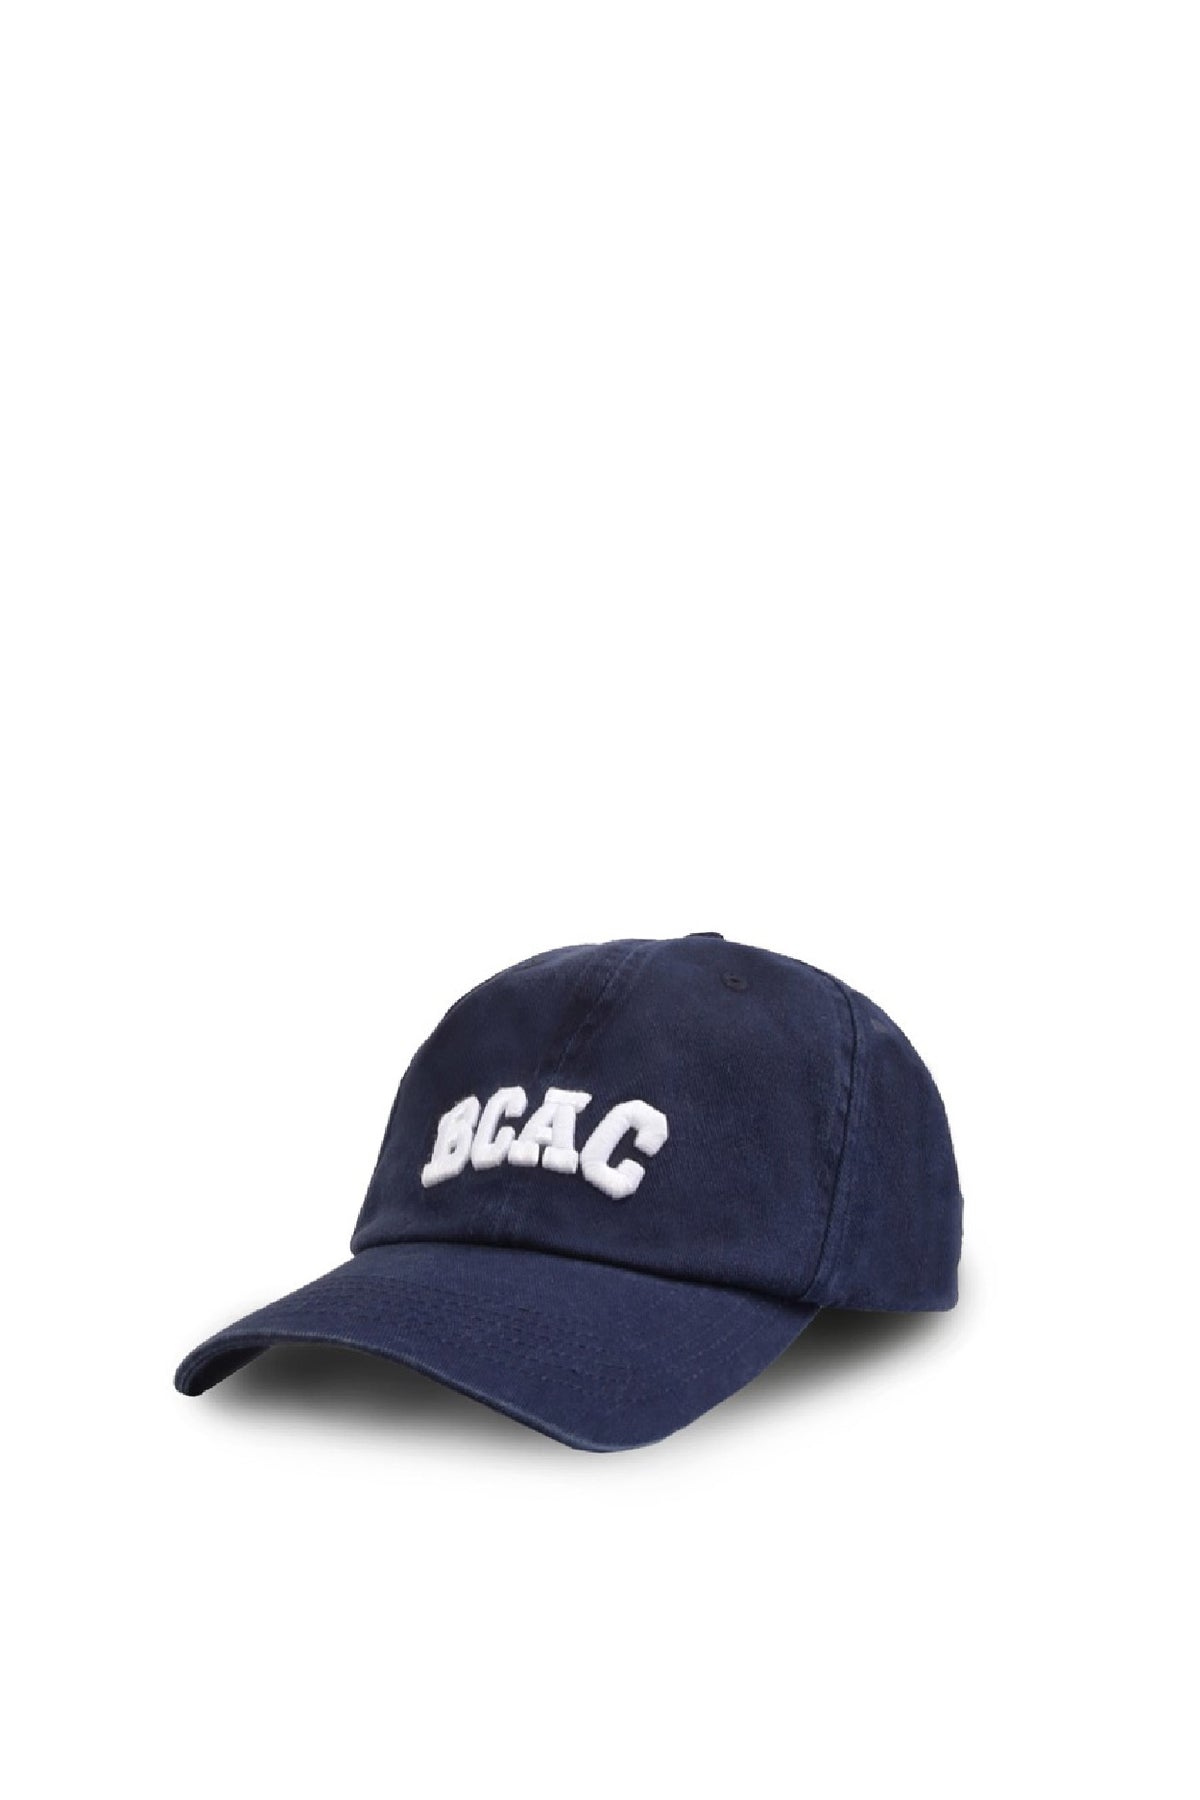 Badblood BCAC emblem washing ball cap Navy